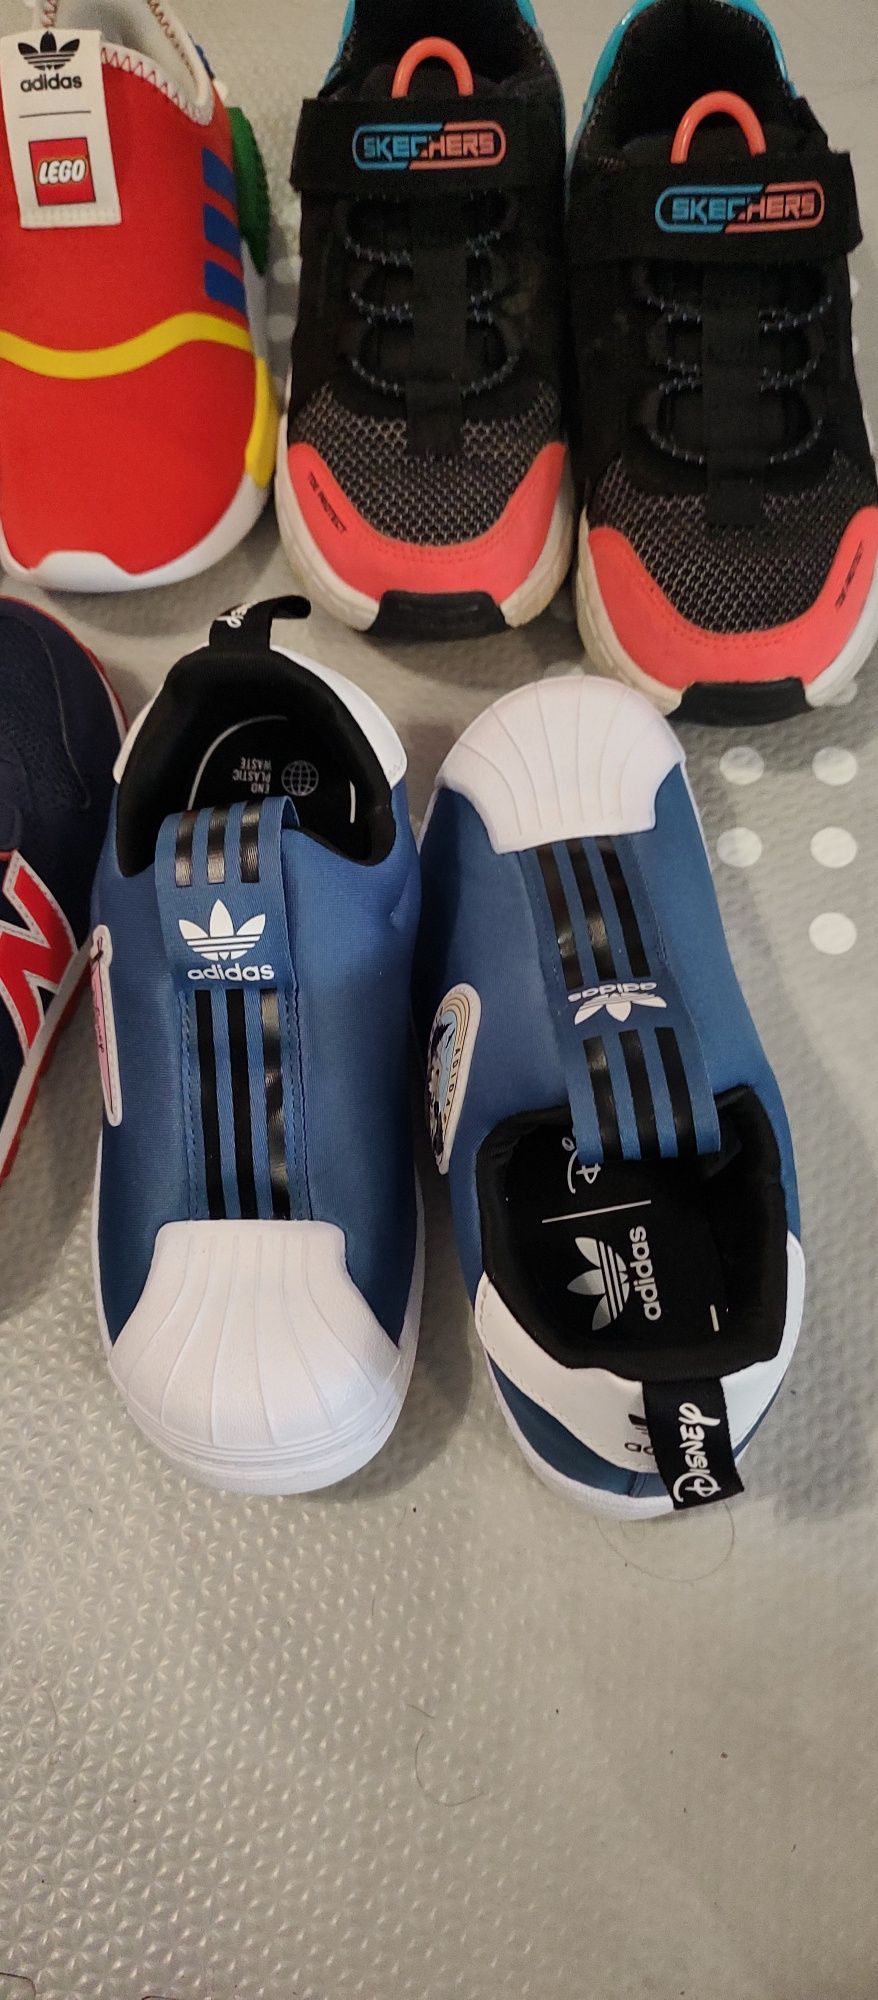 Adidași originali Adidas, New Balance și Skechers copii